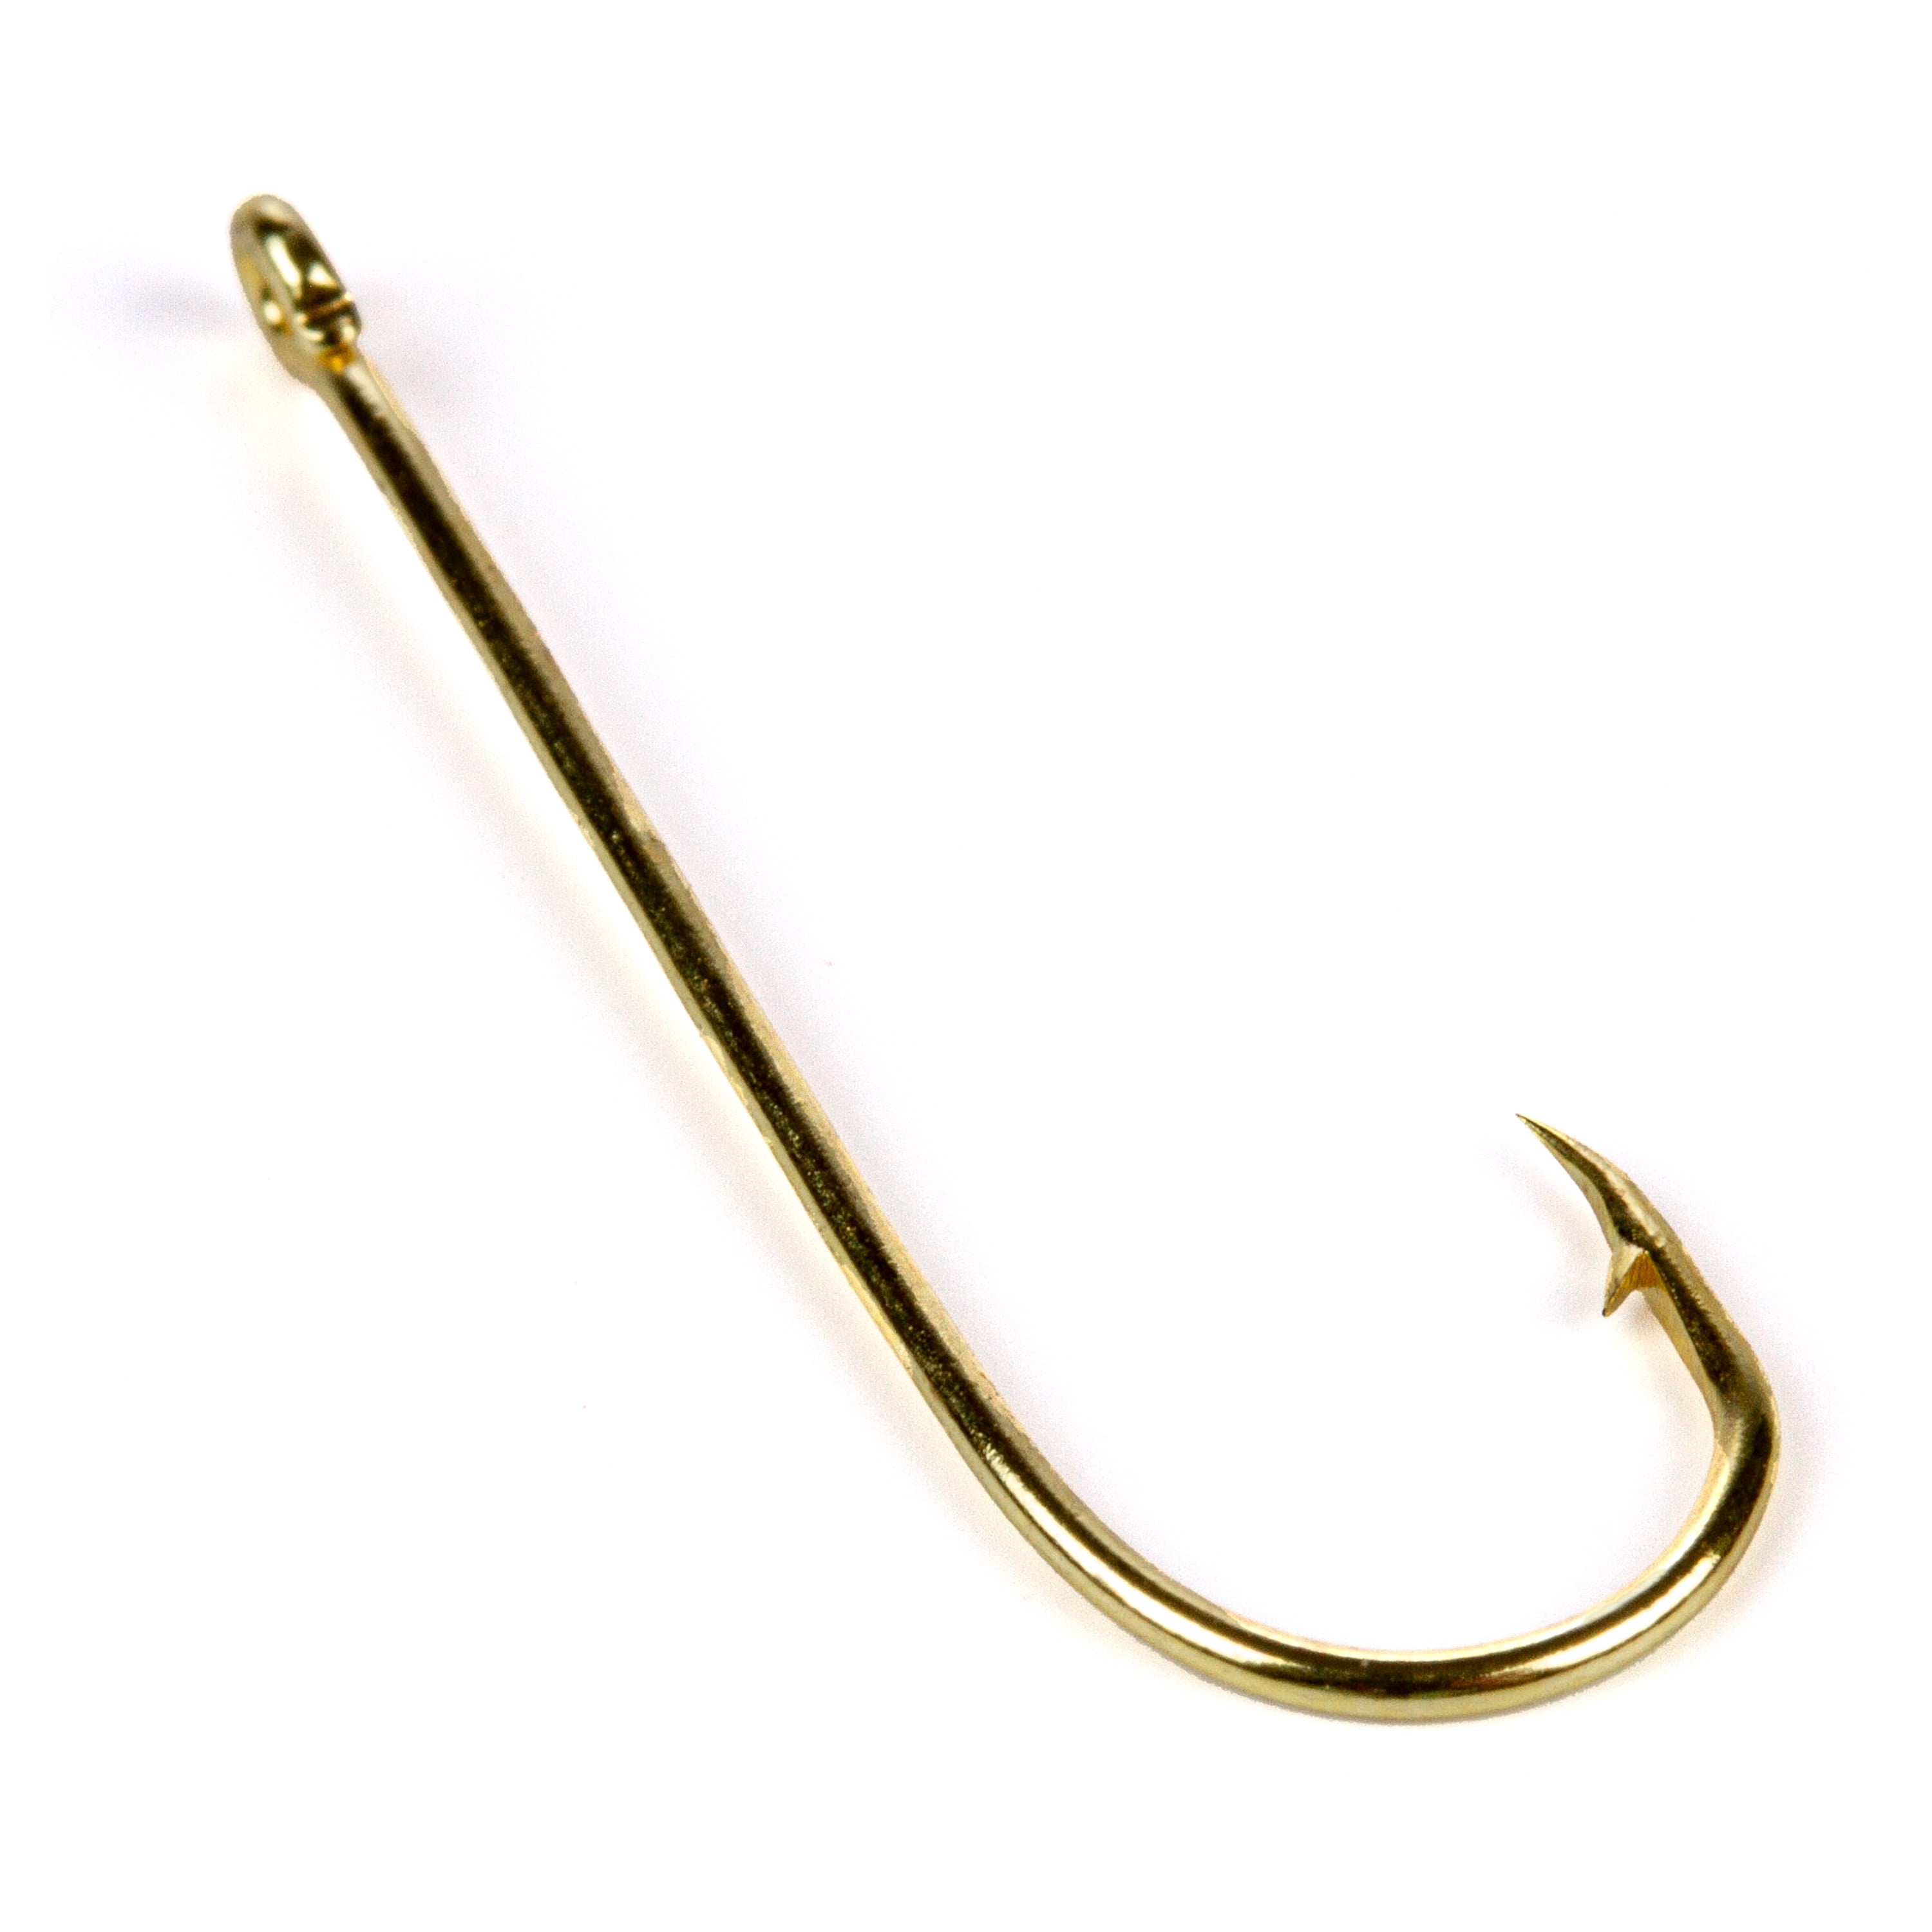 Ozark Trail Gold Aberdeen Light Wire Fishing Hooks Size 4 - 15 Pack 